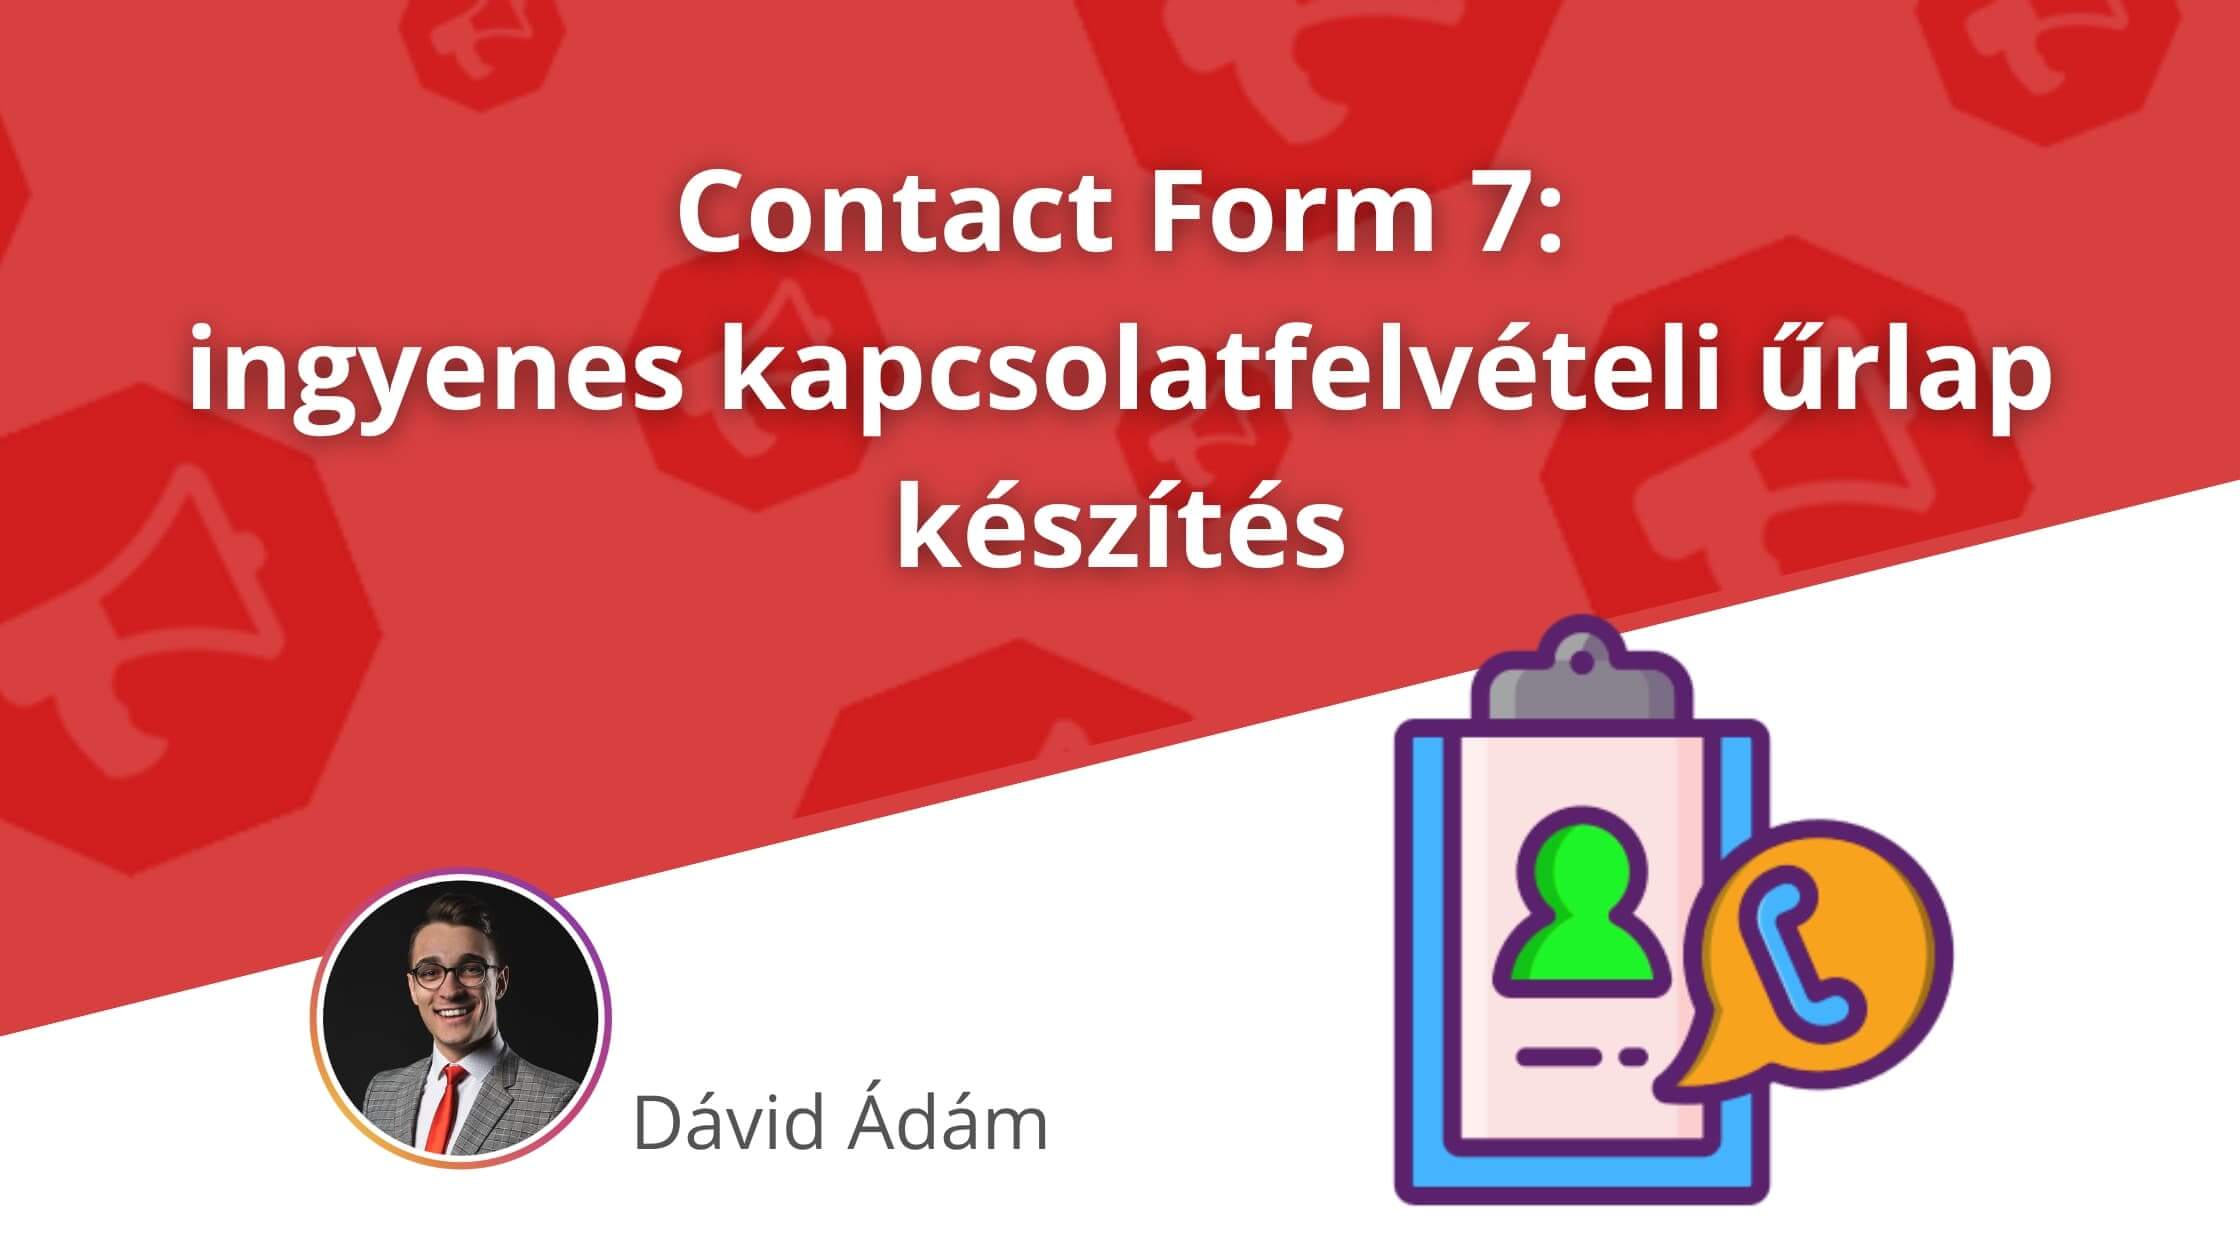 Contact Form 7 bővítmény